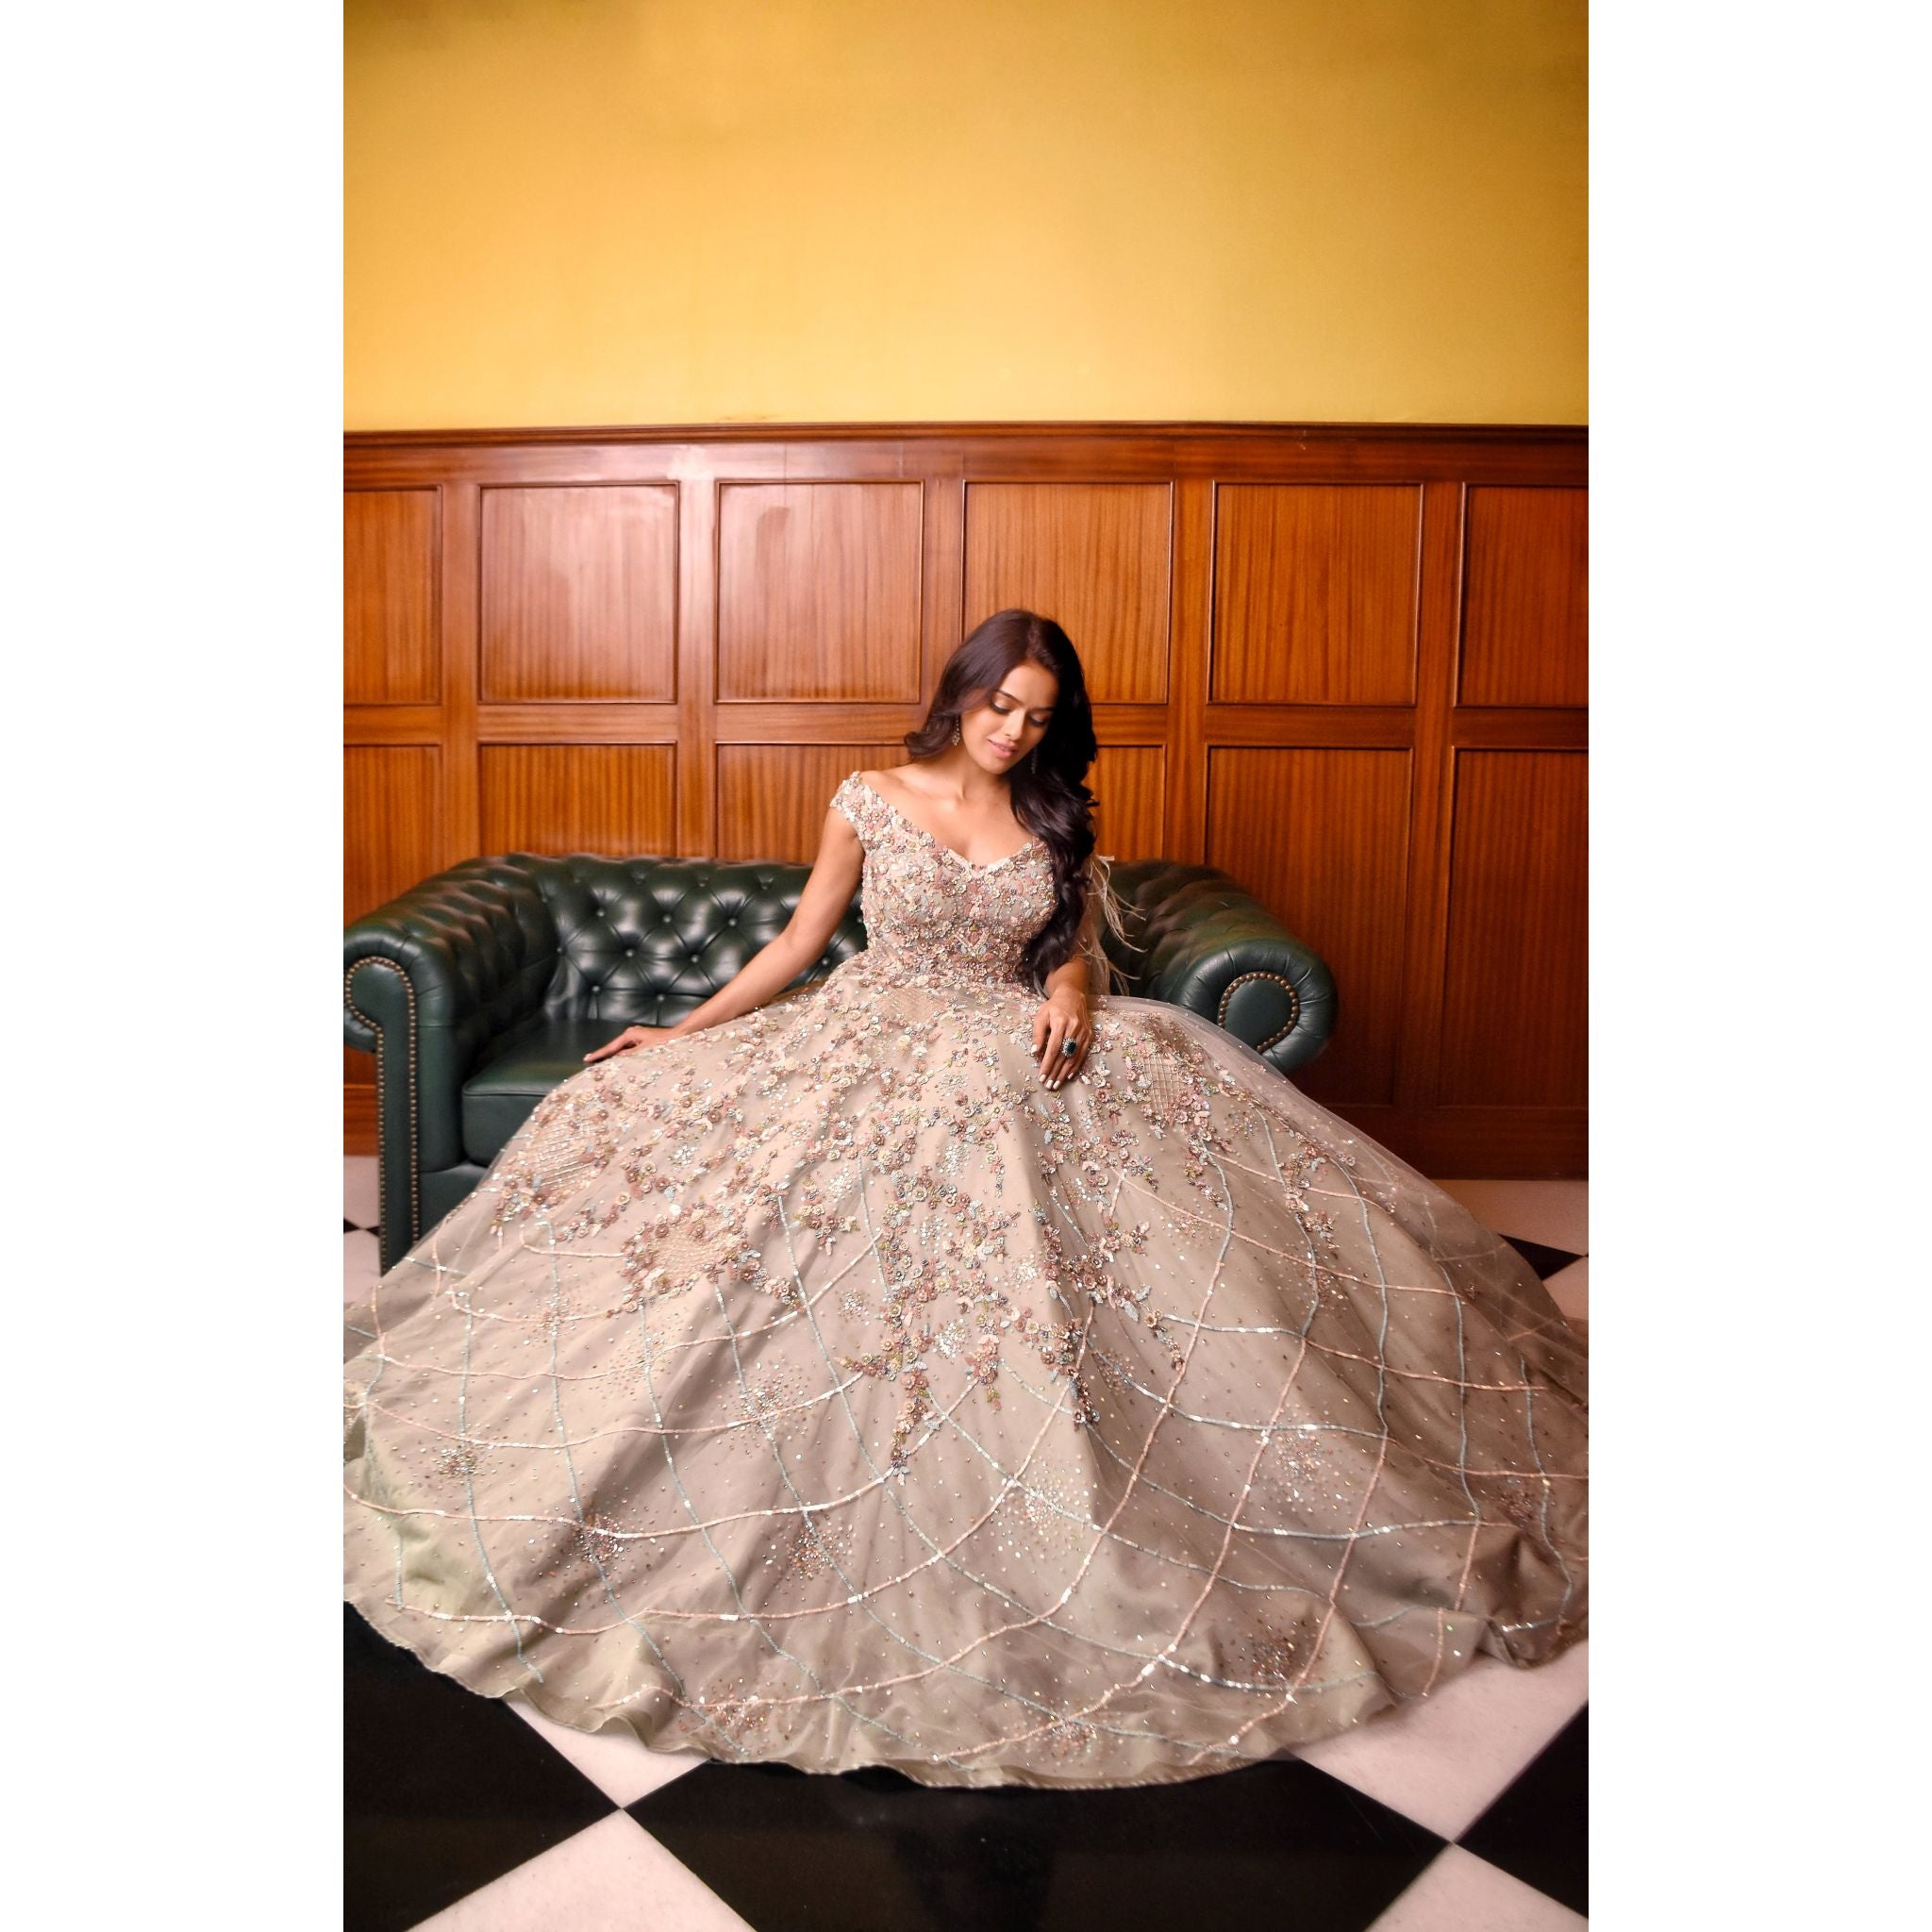 Sage Green Princess Gown - Indian Designer Bridal Wedding Outfit